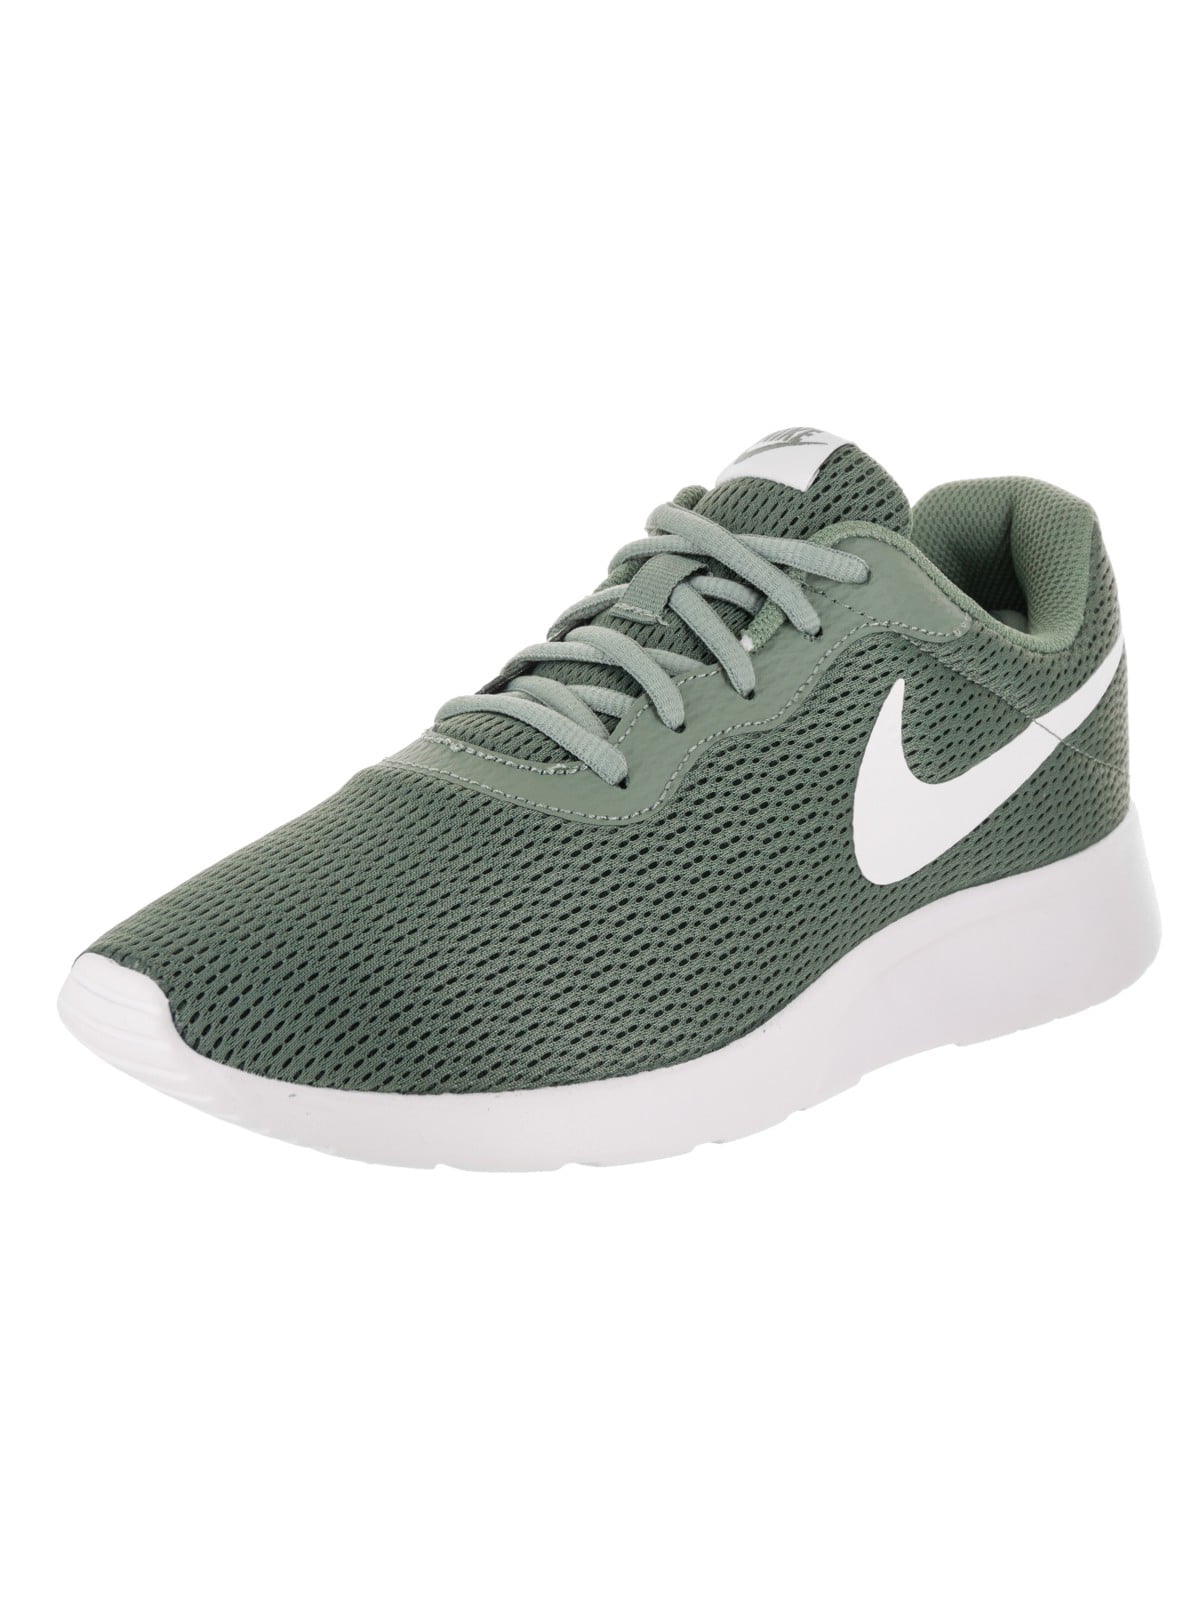 Nike Tanjun Running Clay Green/White, 12 - Walmart.com